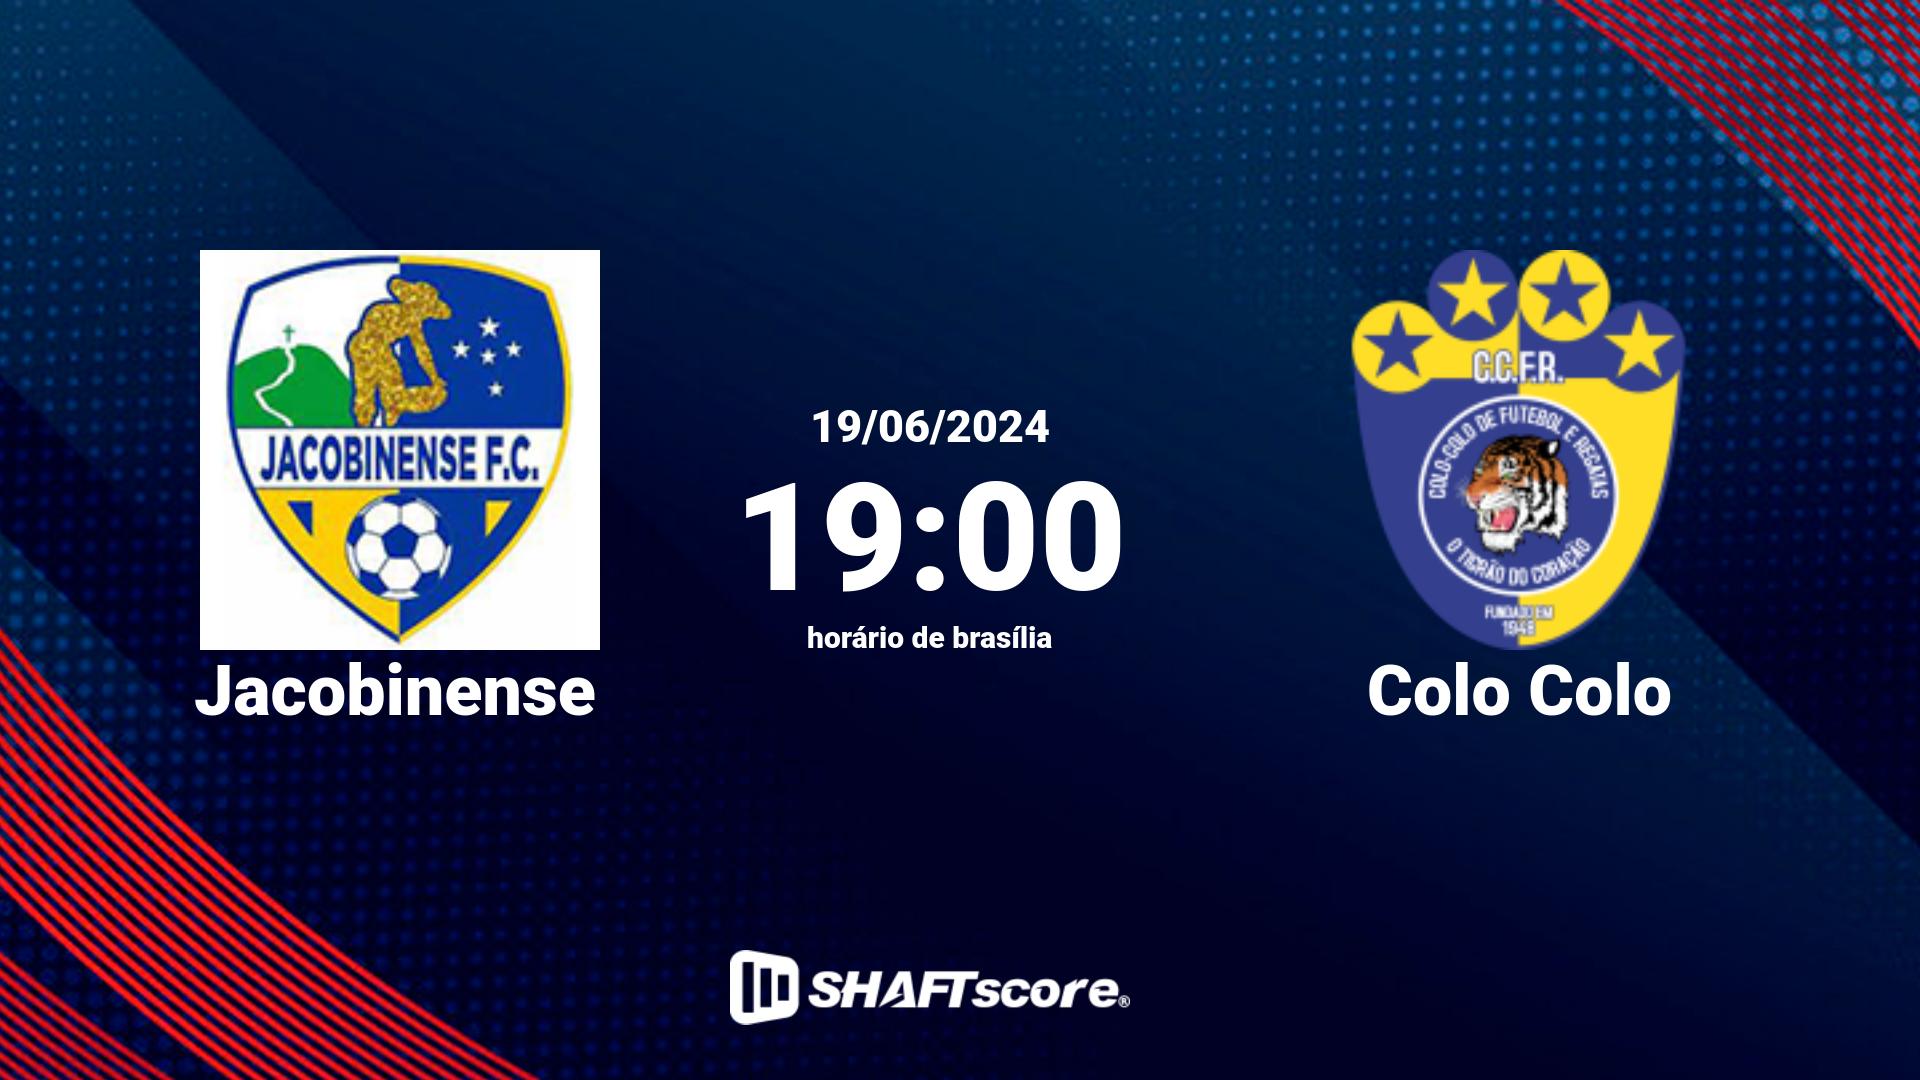 Estatísticas do jogo Jacobinense vs Colo Colo 19.06 19:00